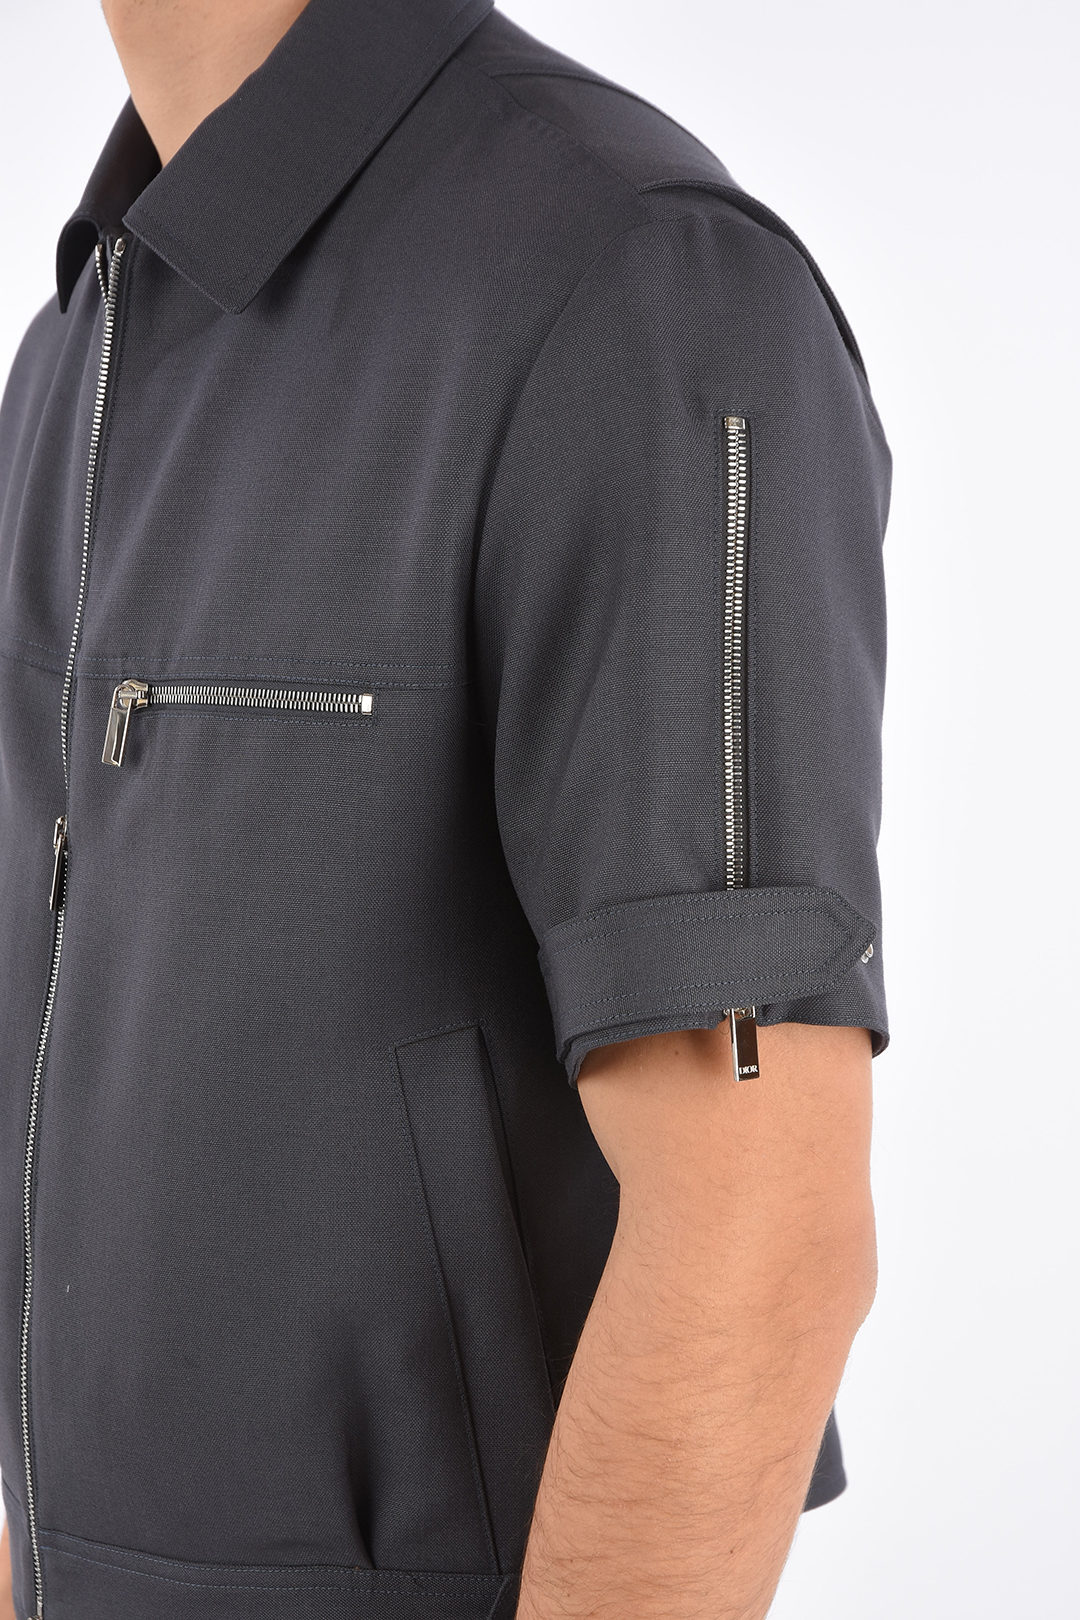 Prada Re-Nylon shirt jacket - Black, £1500.00